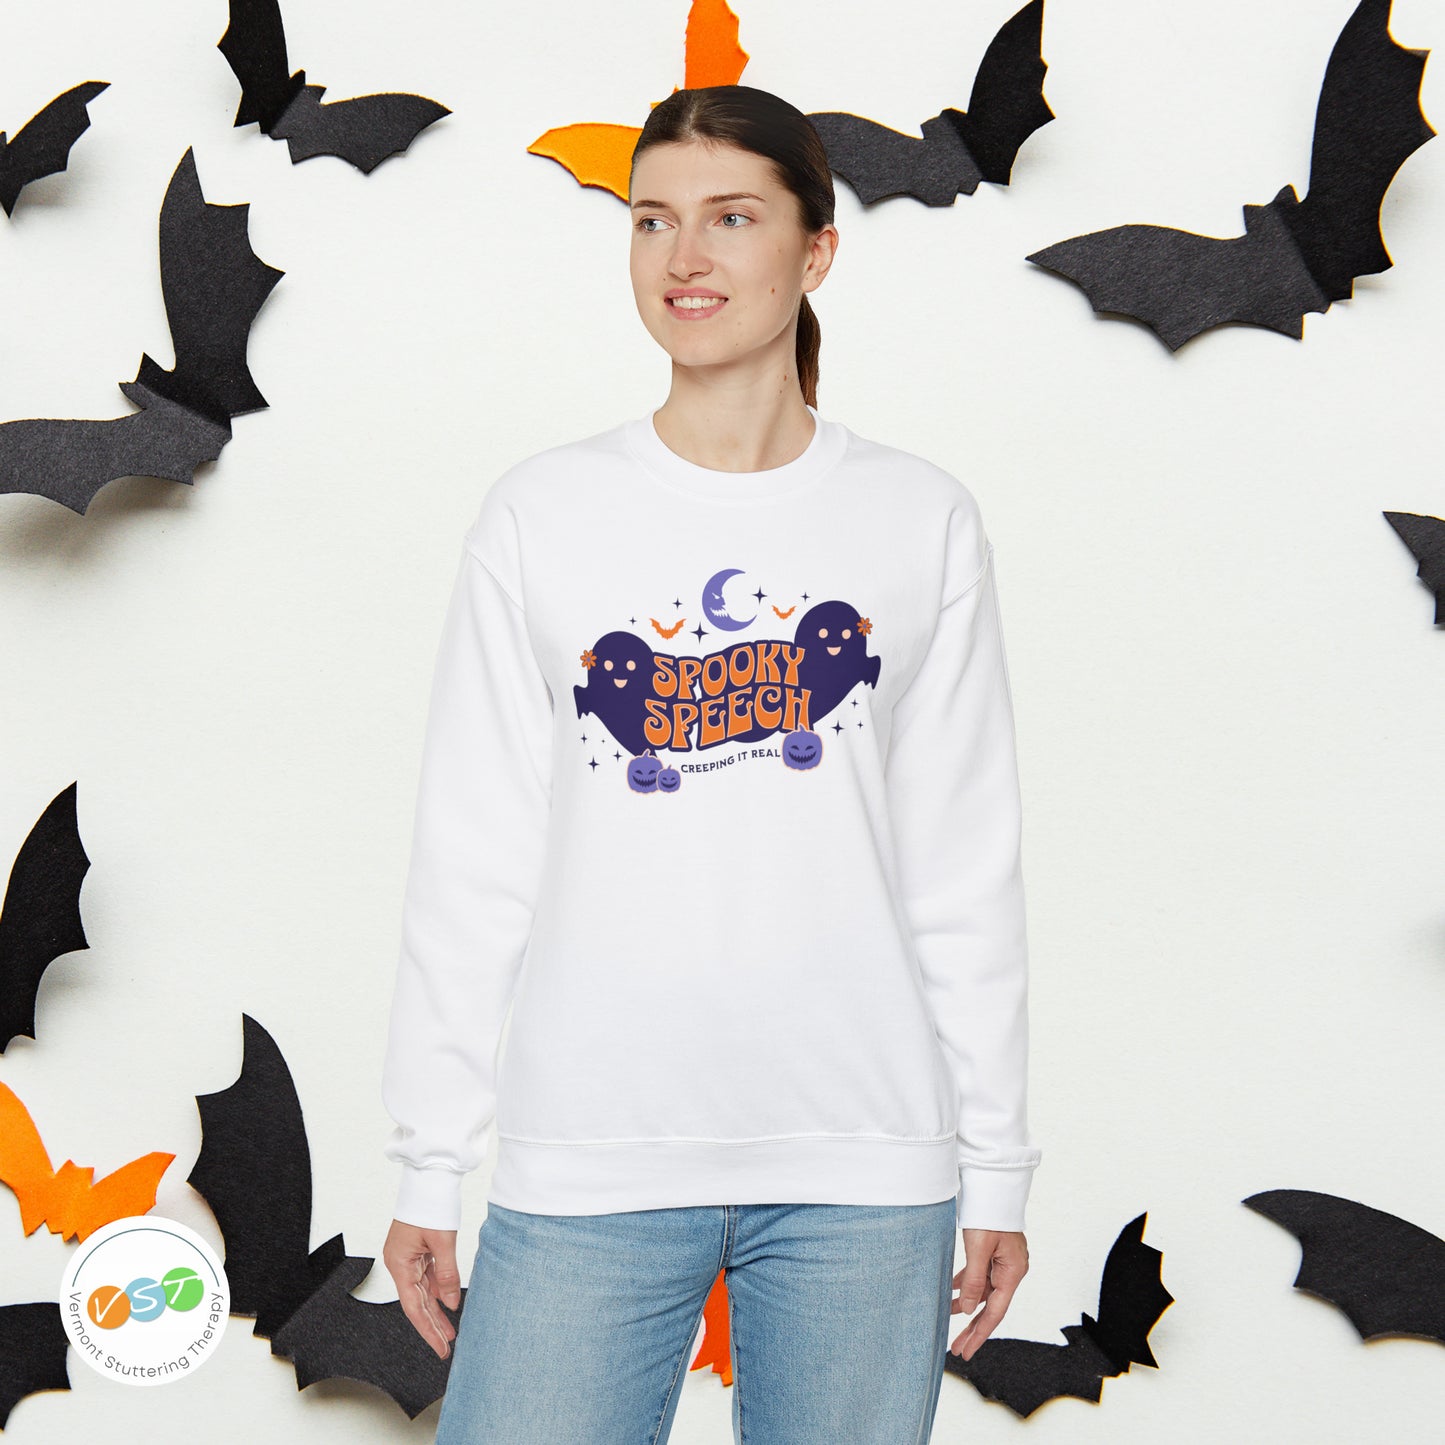 SLP Spooky Speech Creeping It Real Halloween Sweatshirt